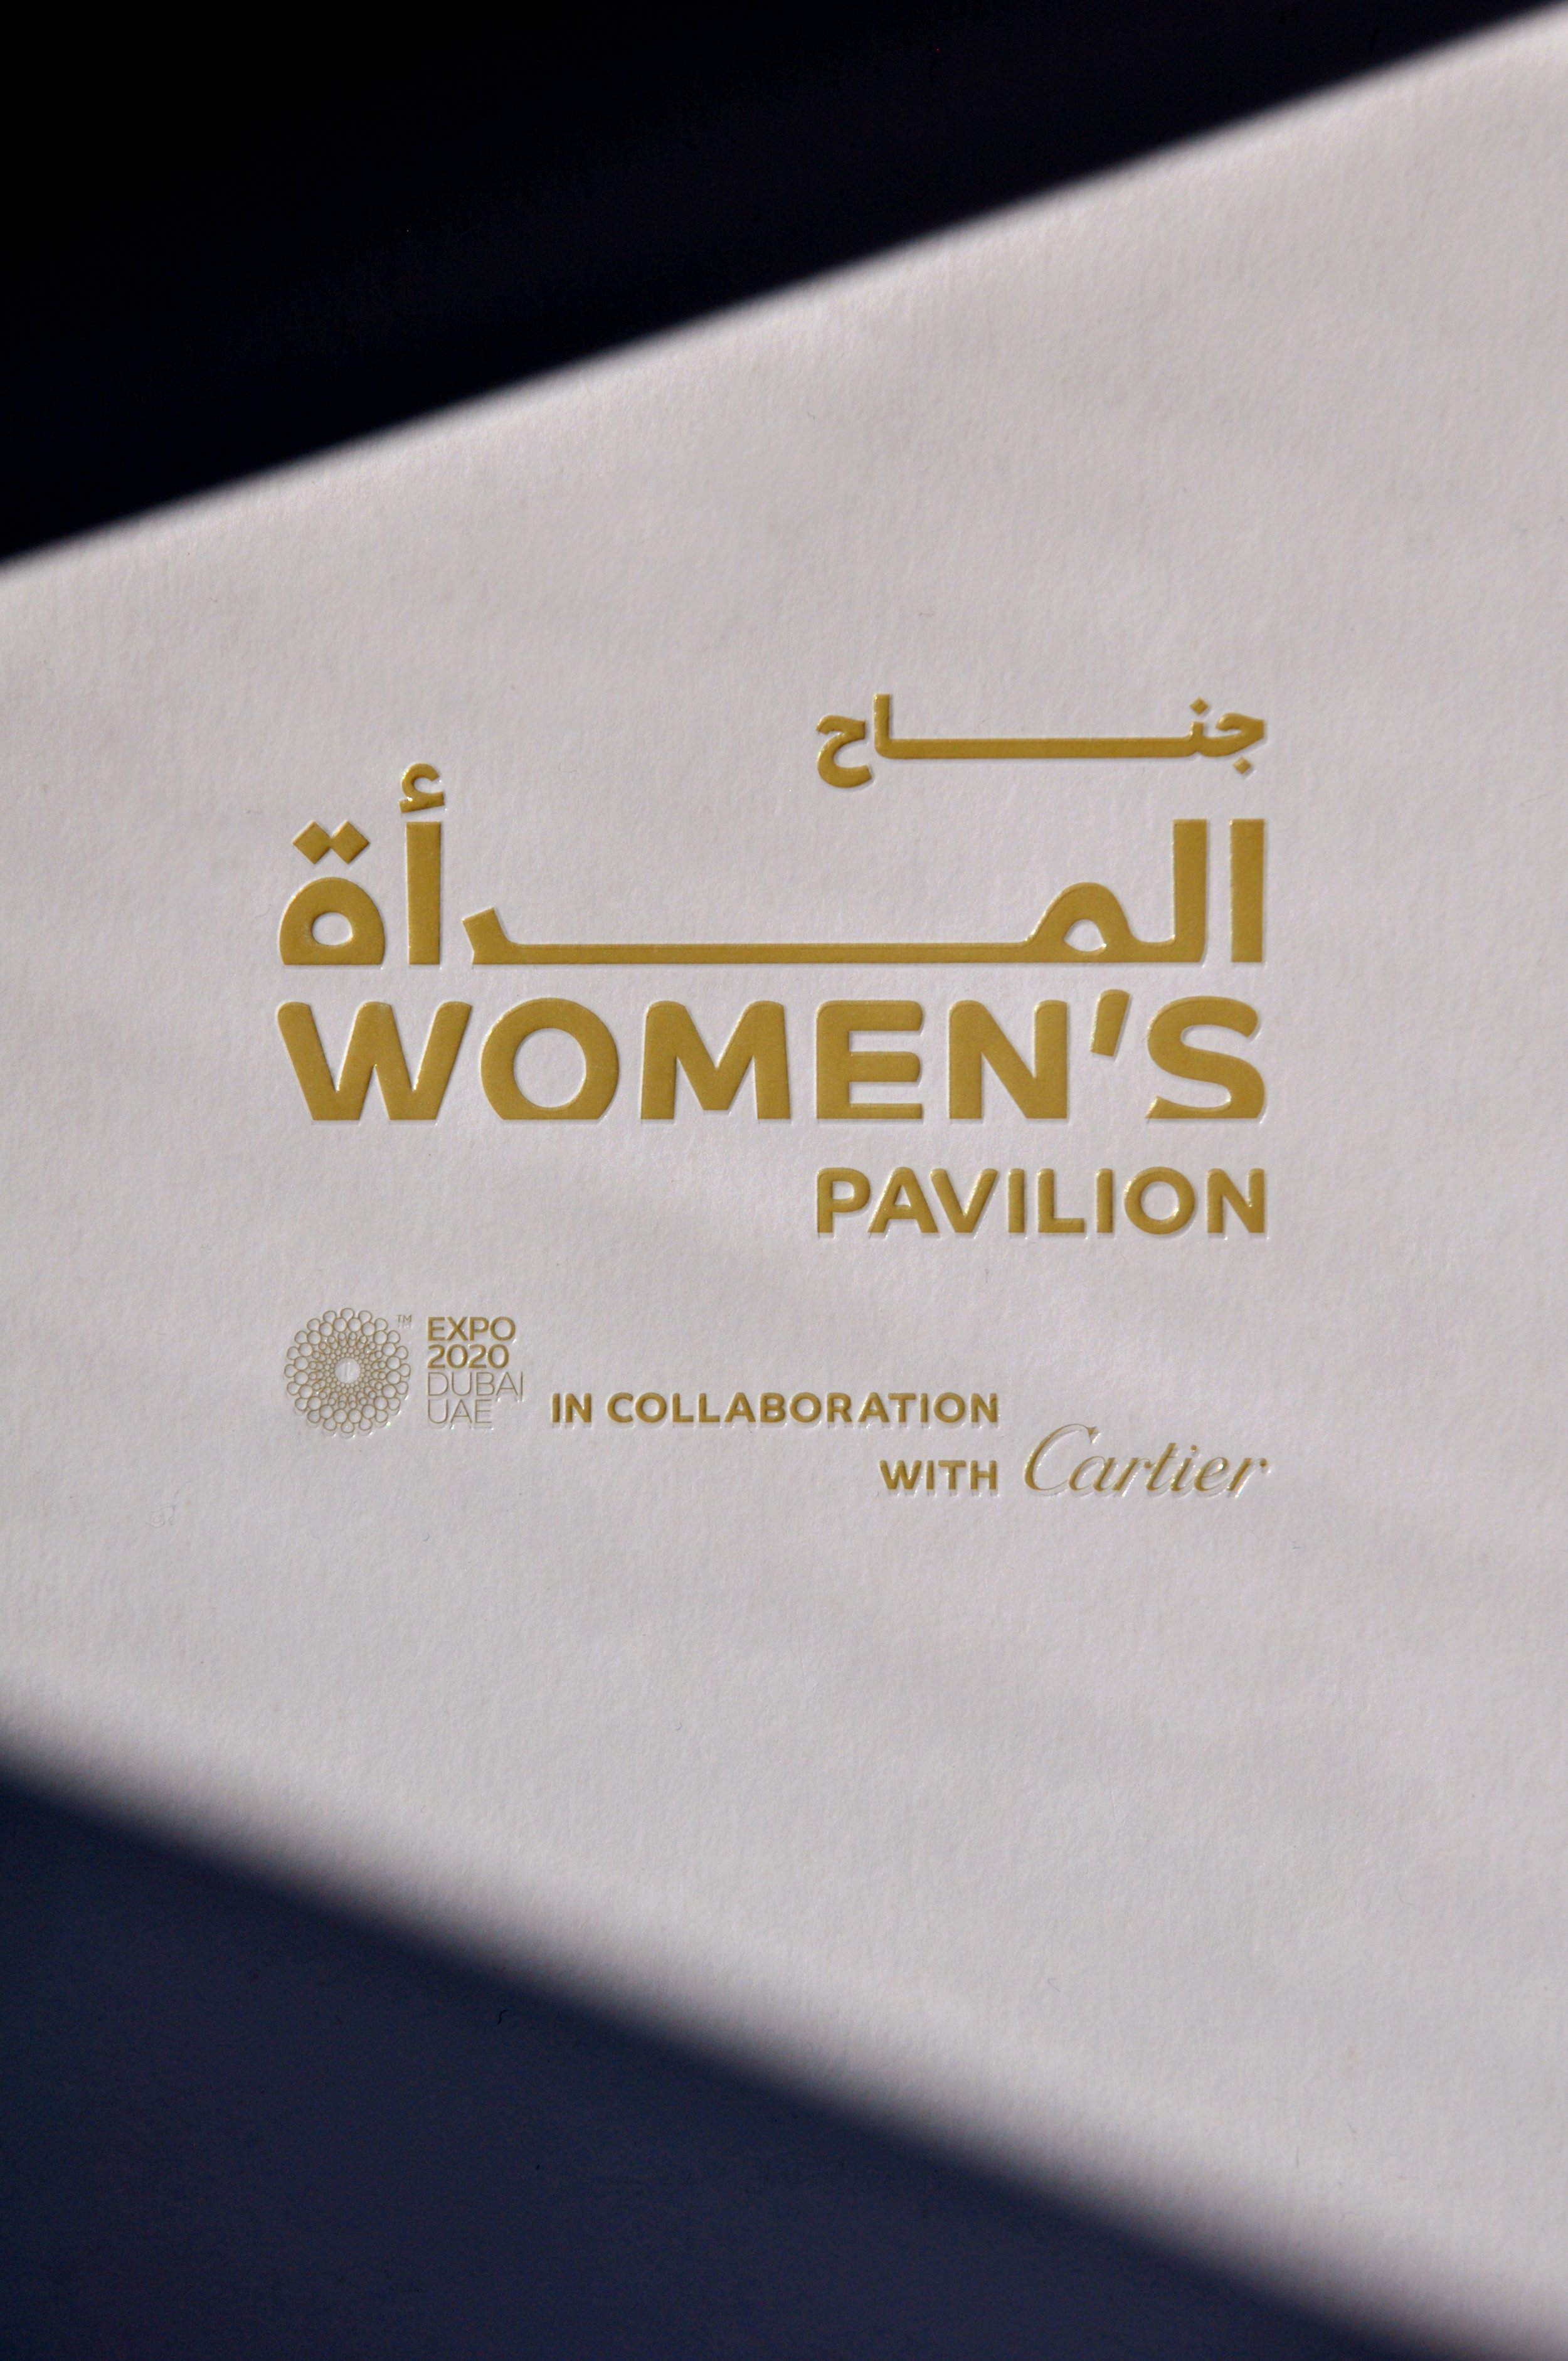 WOMEN'S PAVILION | EXPO 2020 DUBAI